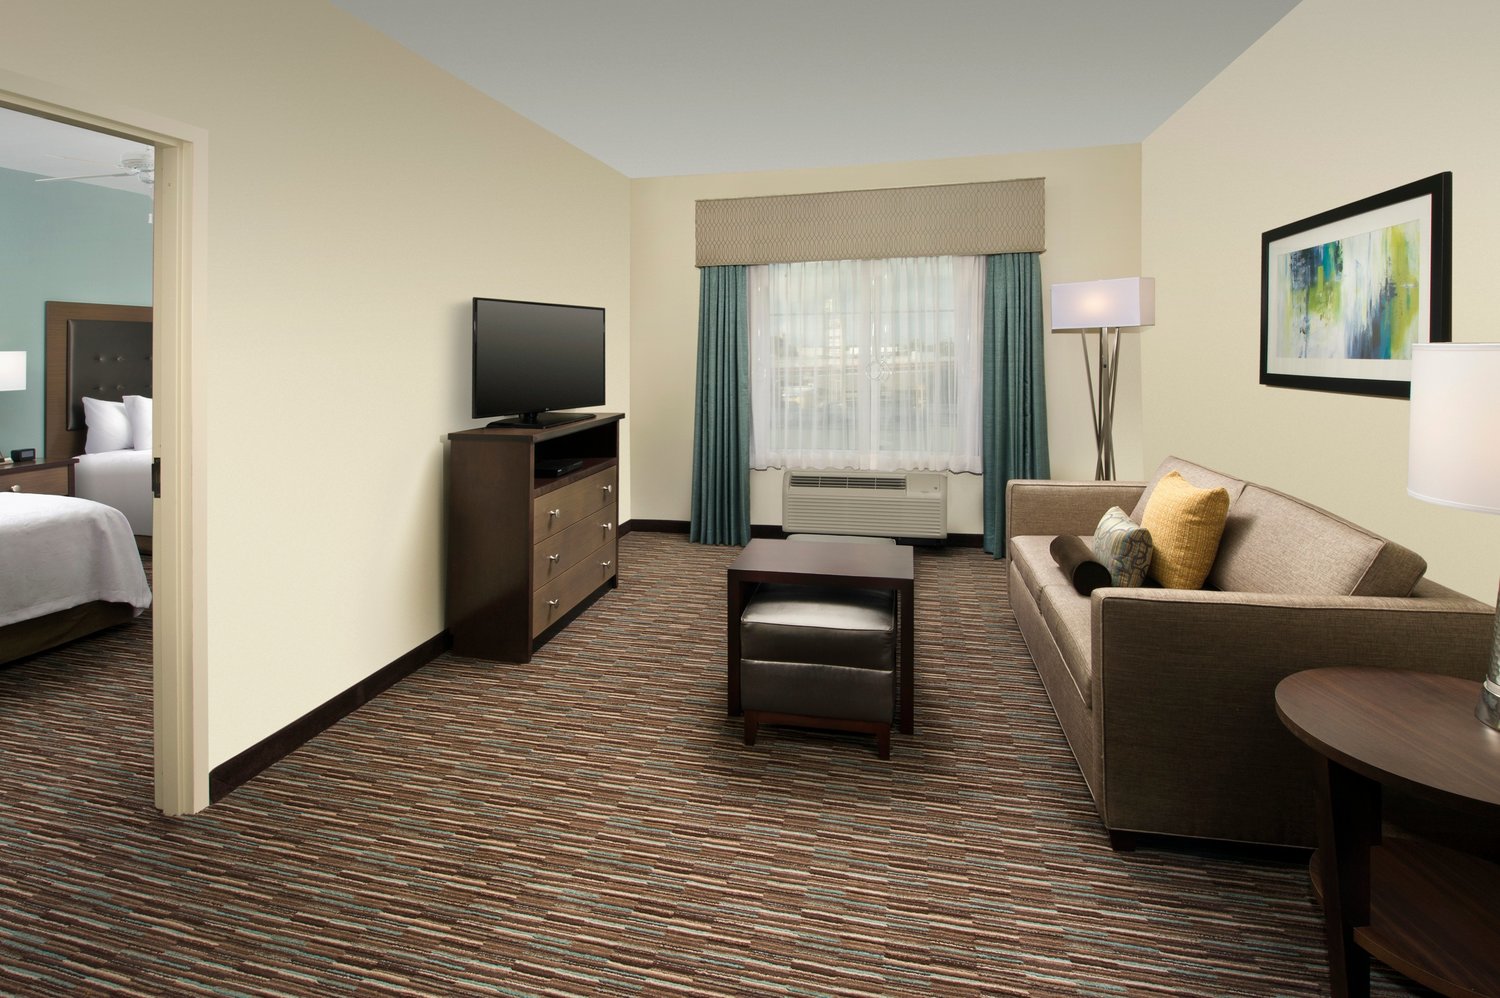 Homewood Suites by Hilton San Antonio Airport, San Antonio, TX Jobs